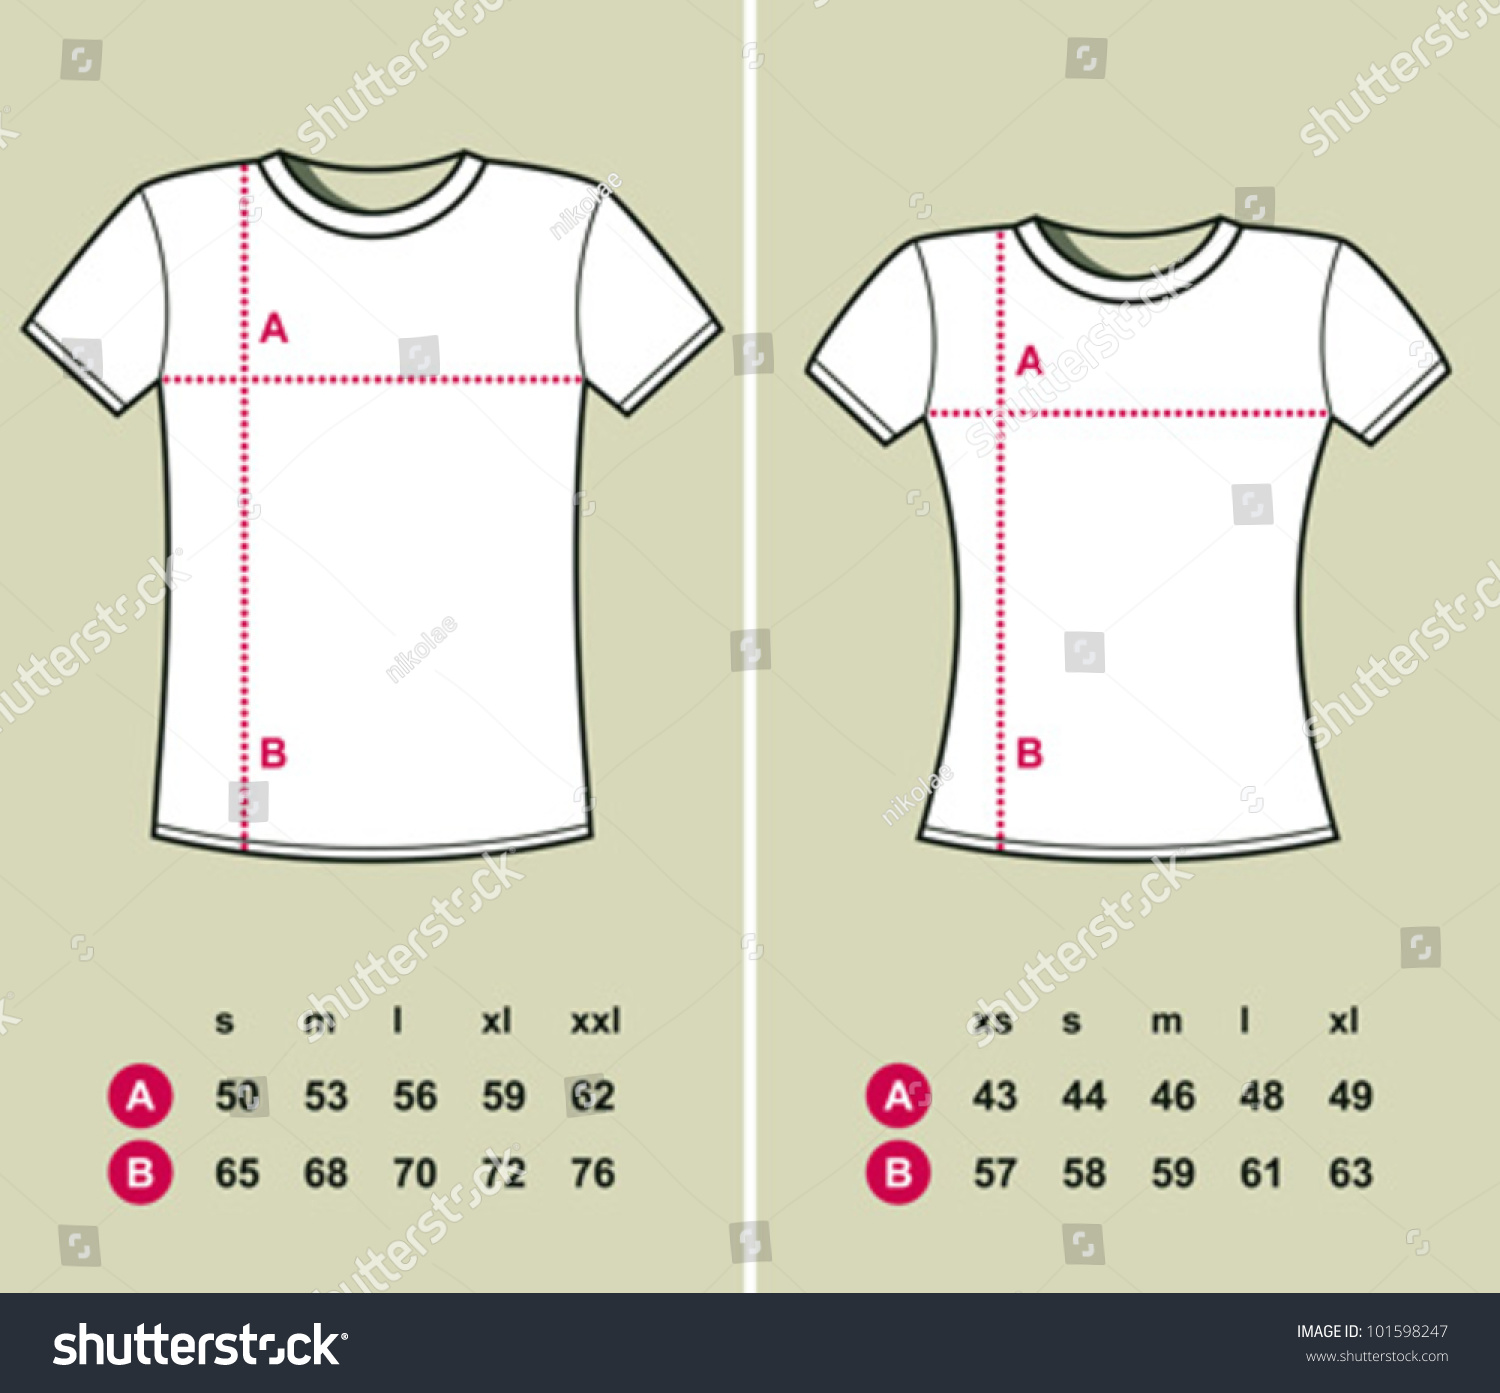 T-Shirt Sizes (Men And Women) Stock Vector Illustration 101598247 ...